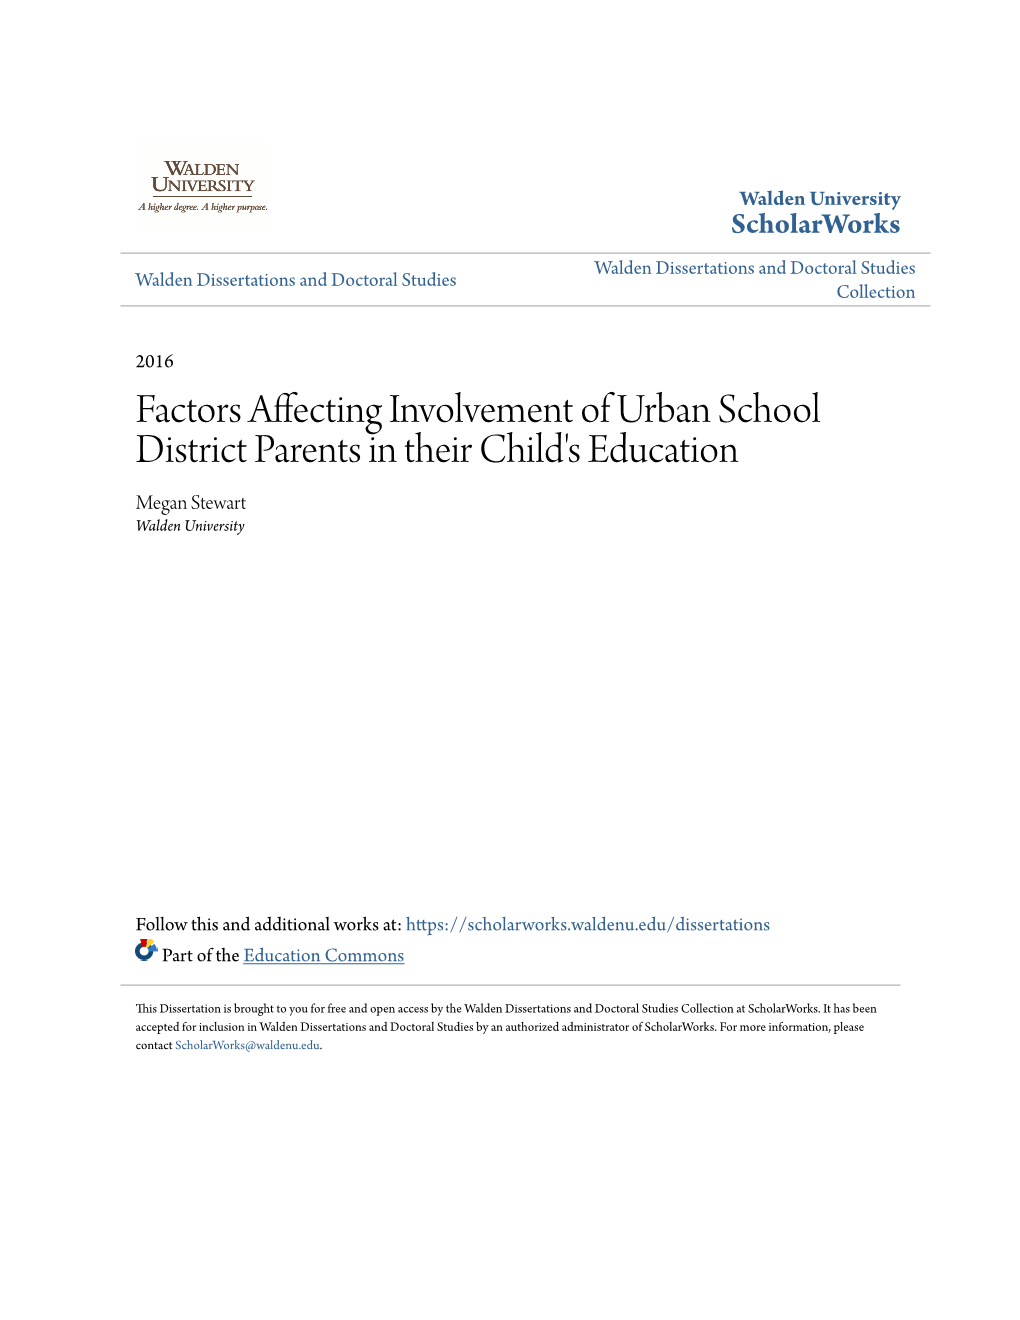 Factors Affecting Involvement of Urban School District Parents in Their Child's Education Megan Stewart Walden University